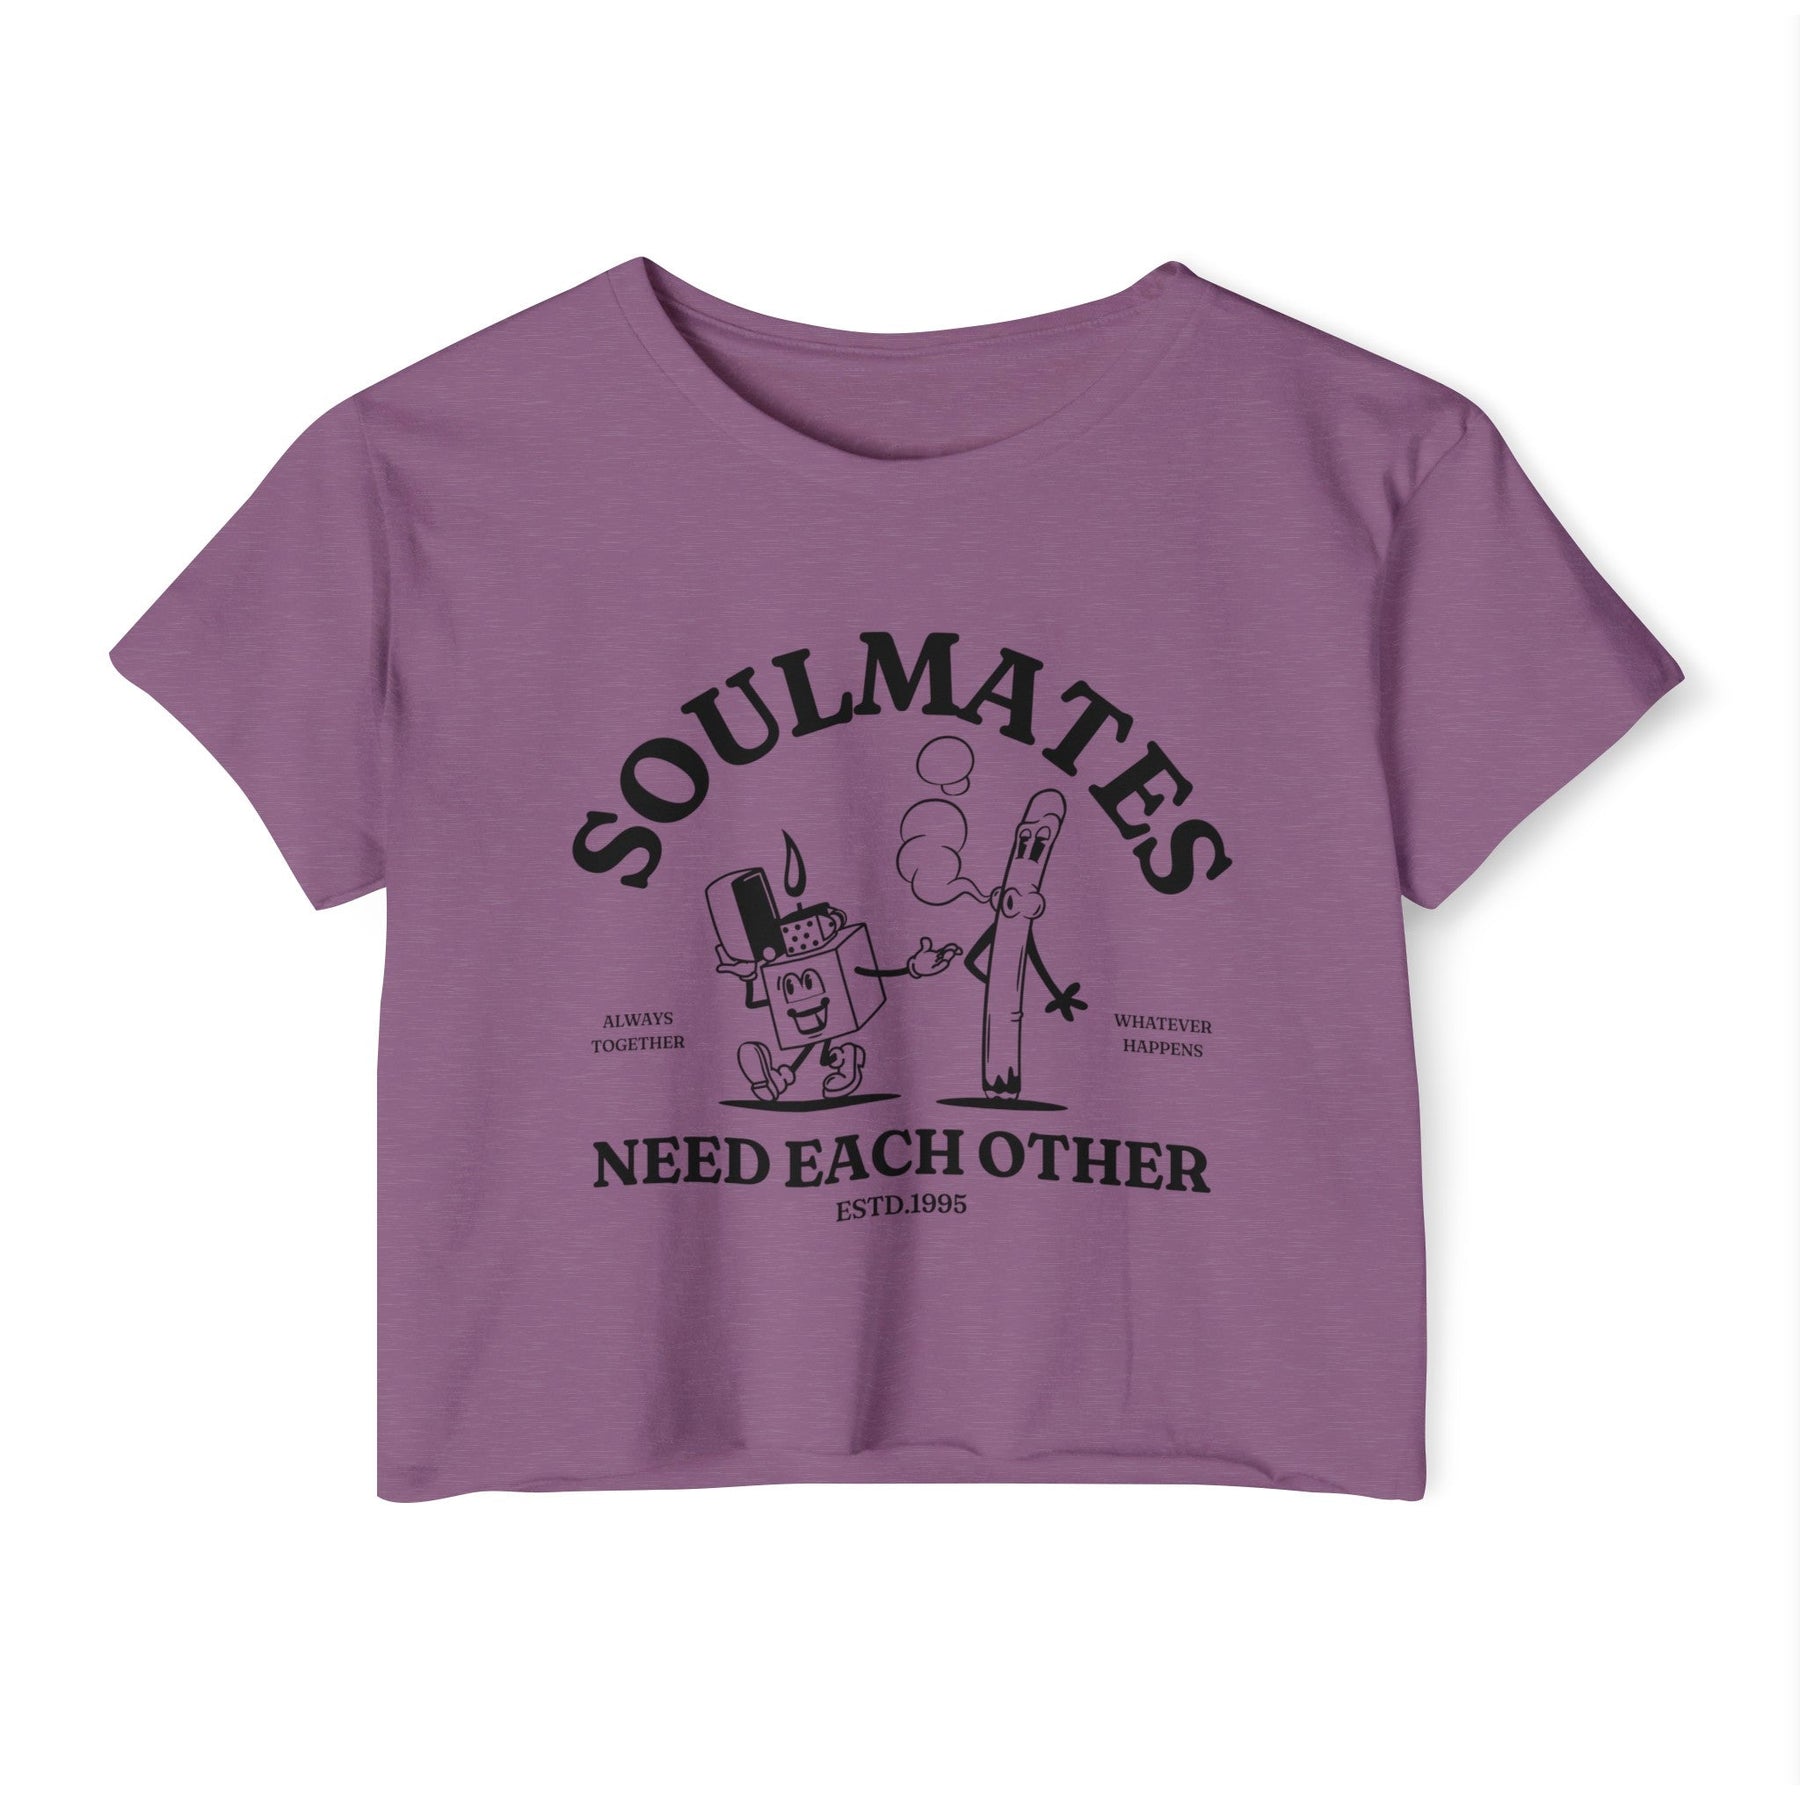 Soulmates Women's Crop Top - Goth Cloth Co.T - Shirt73296563426108532598